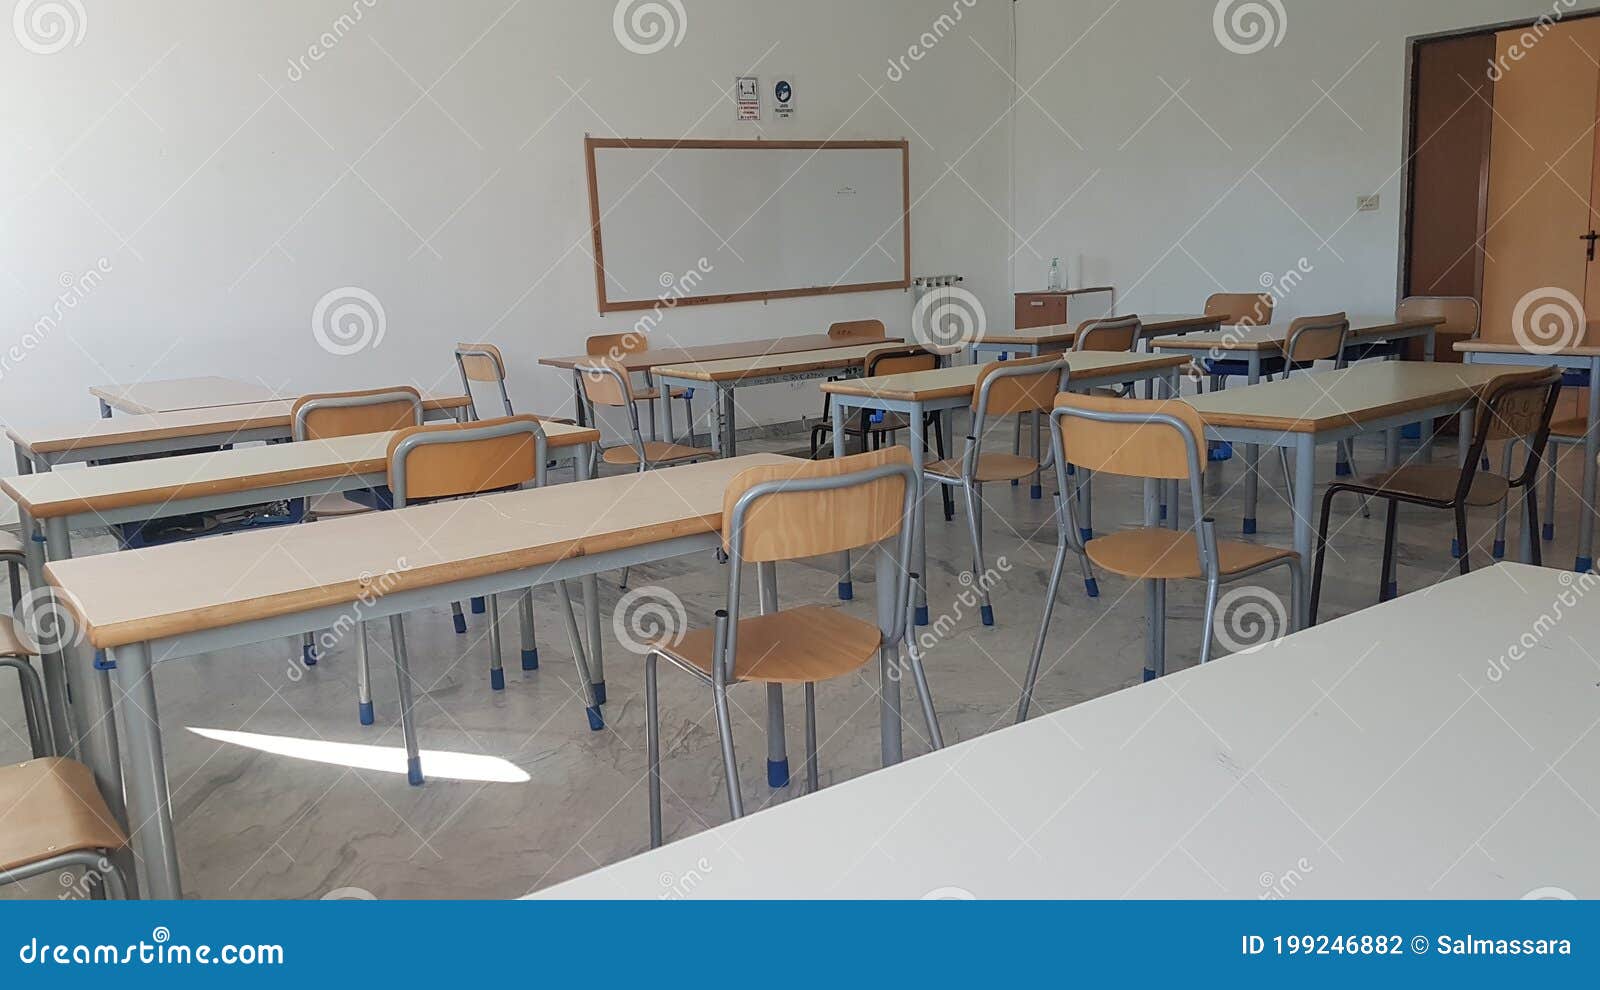 empty classrooms for coronavirus